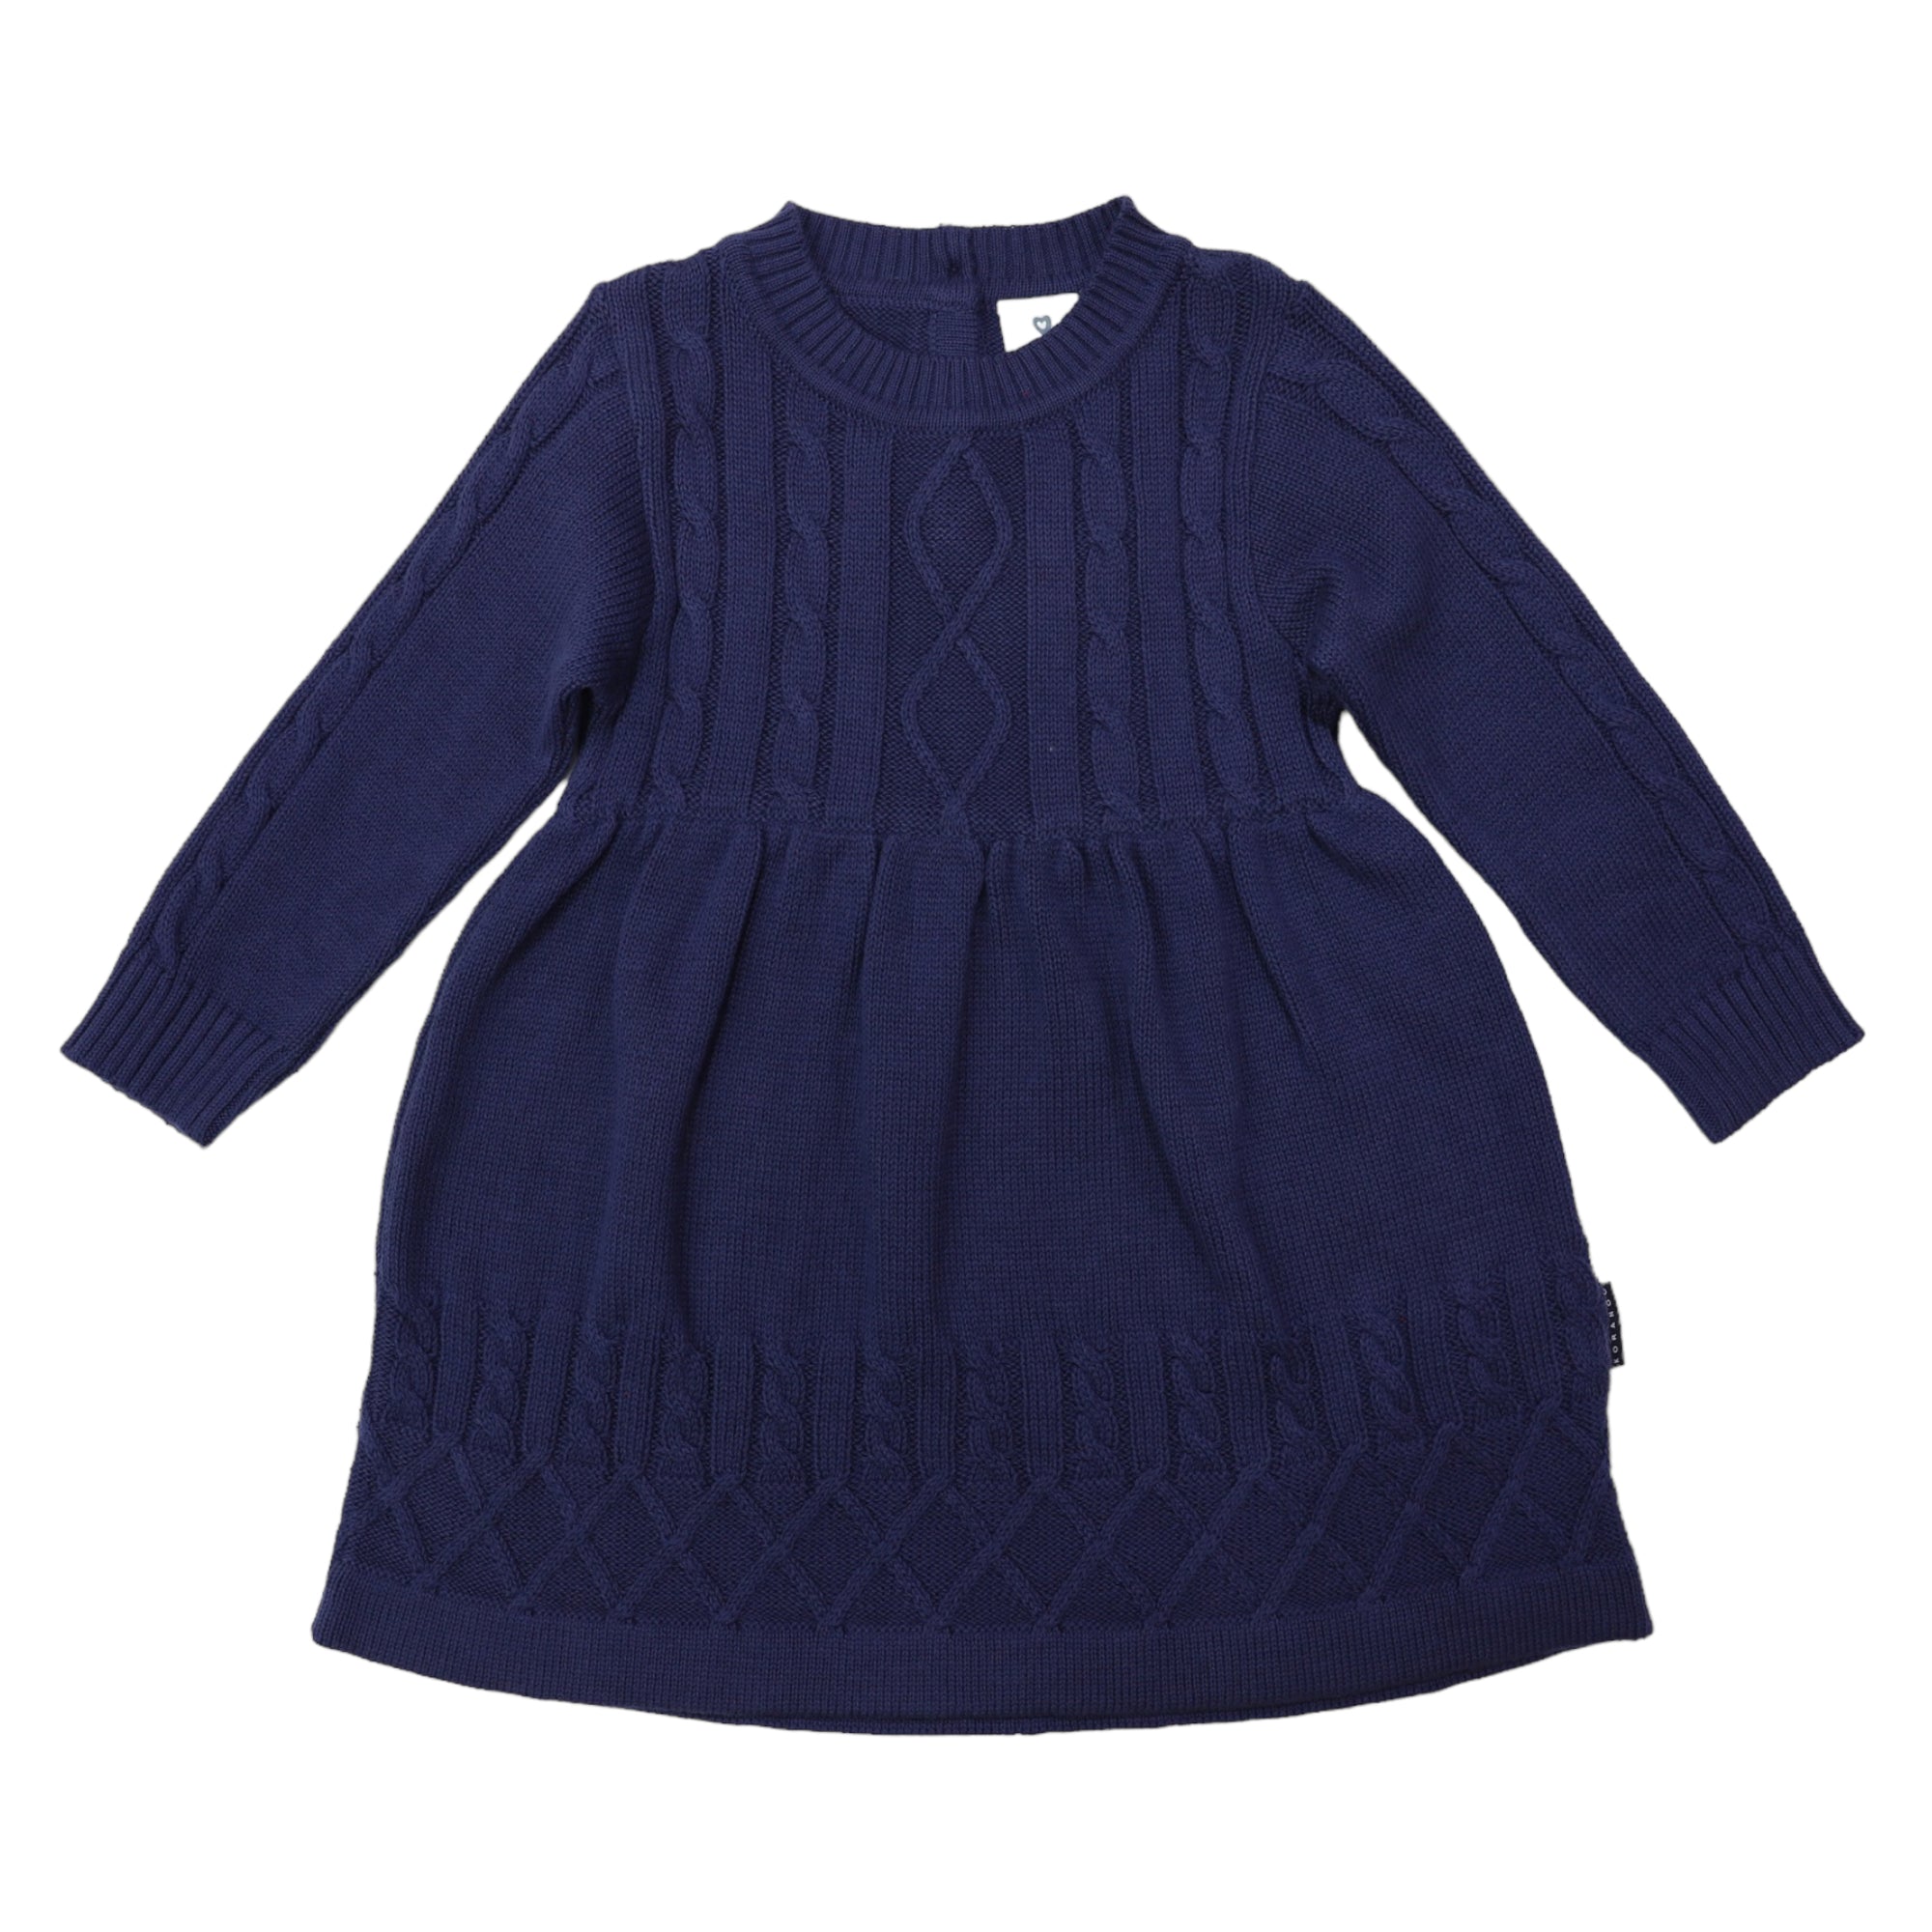 Korango Textured Knit Dress - Navy